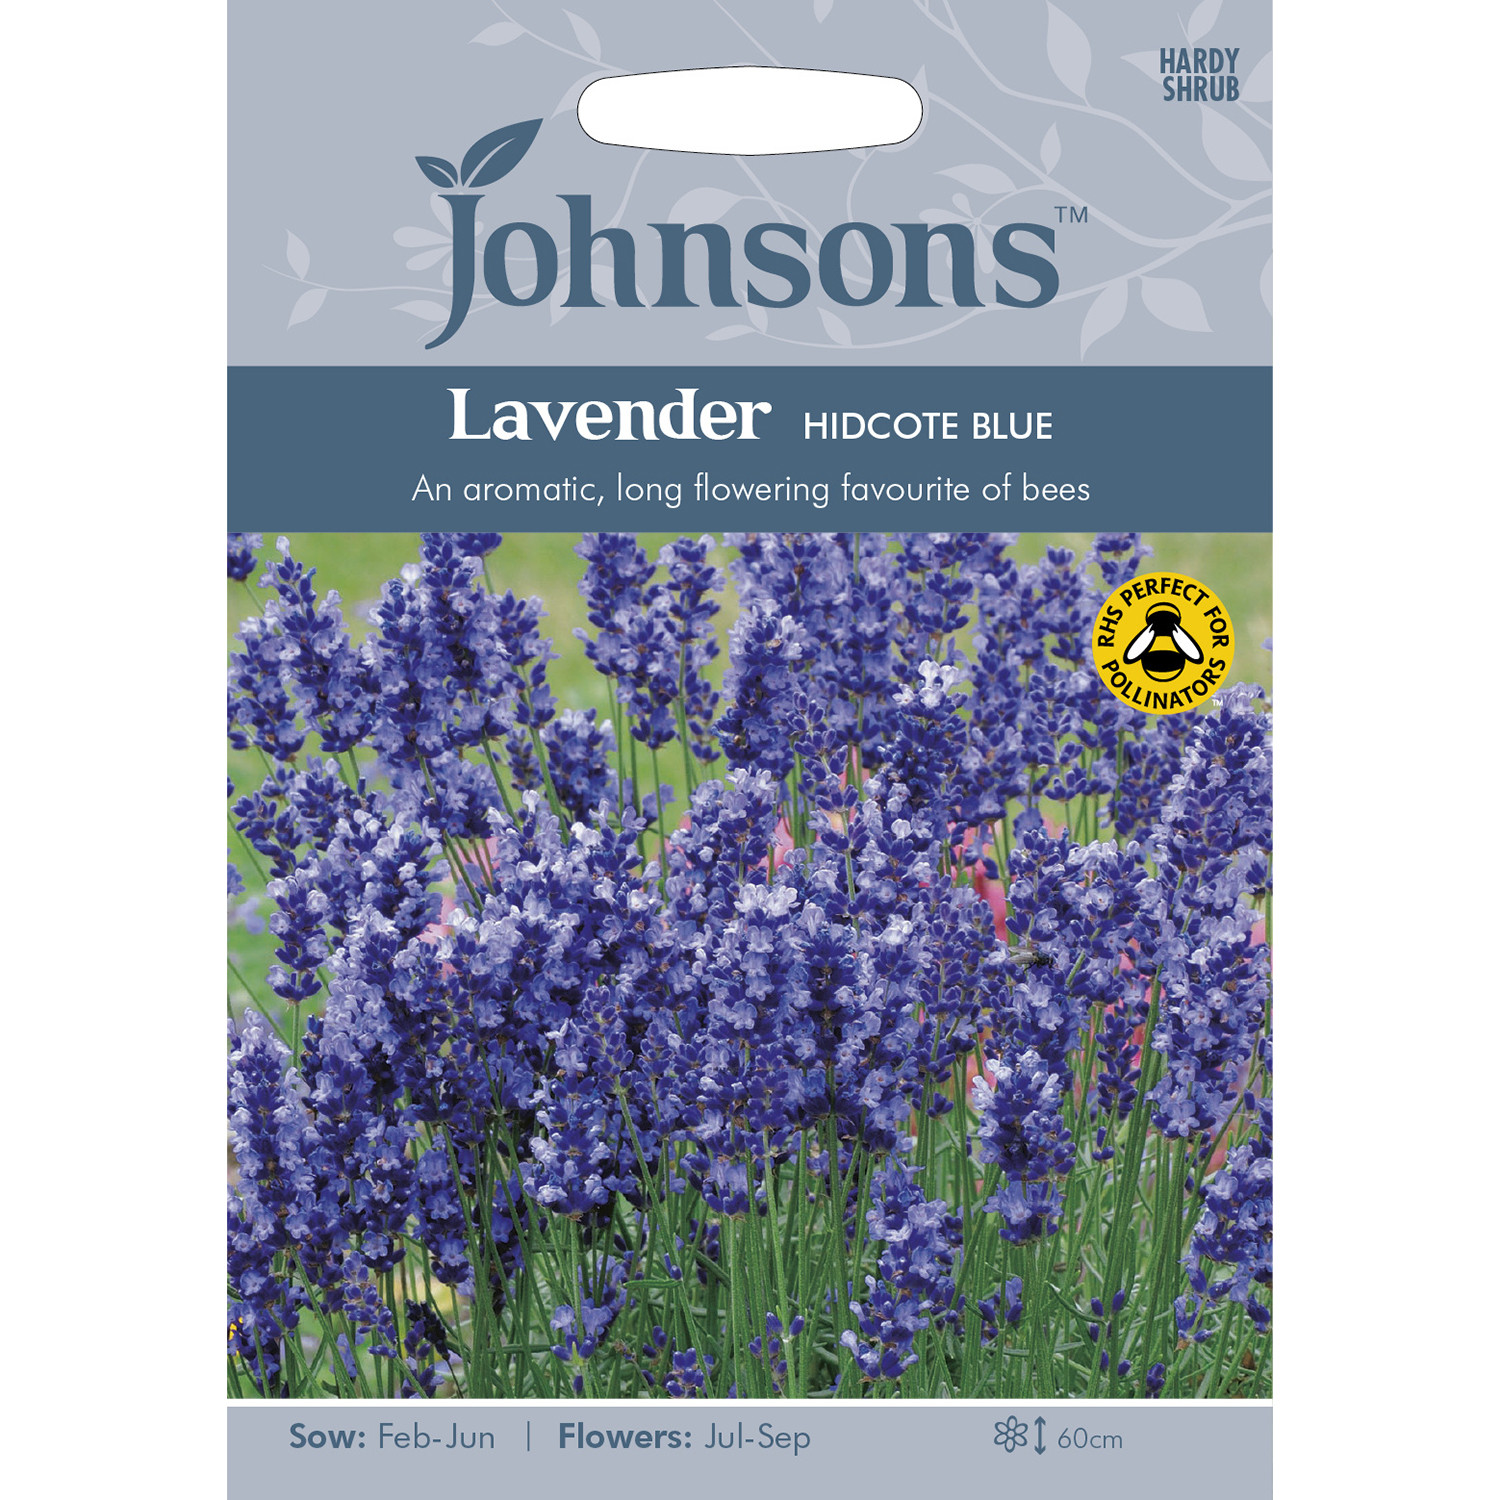 Johnsons Lavender Hidcote Blue Flower Seeds Image 2